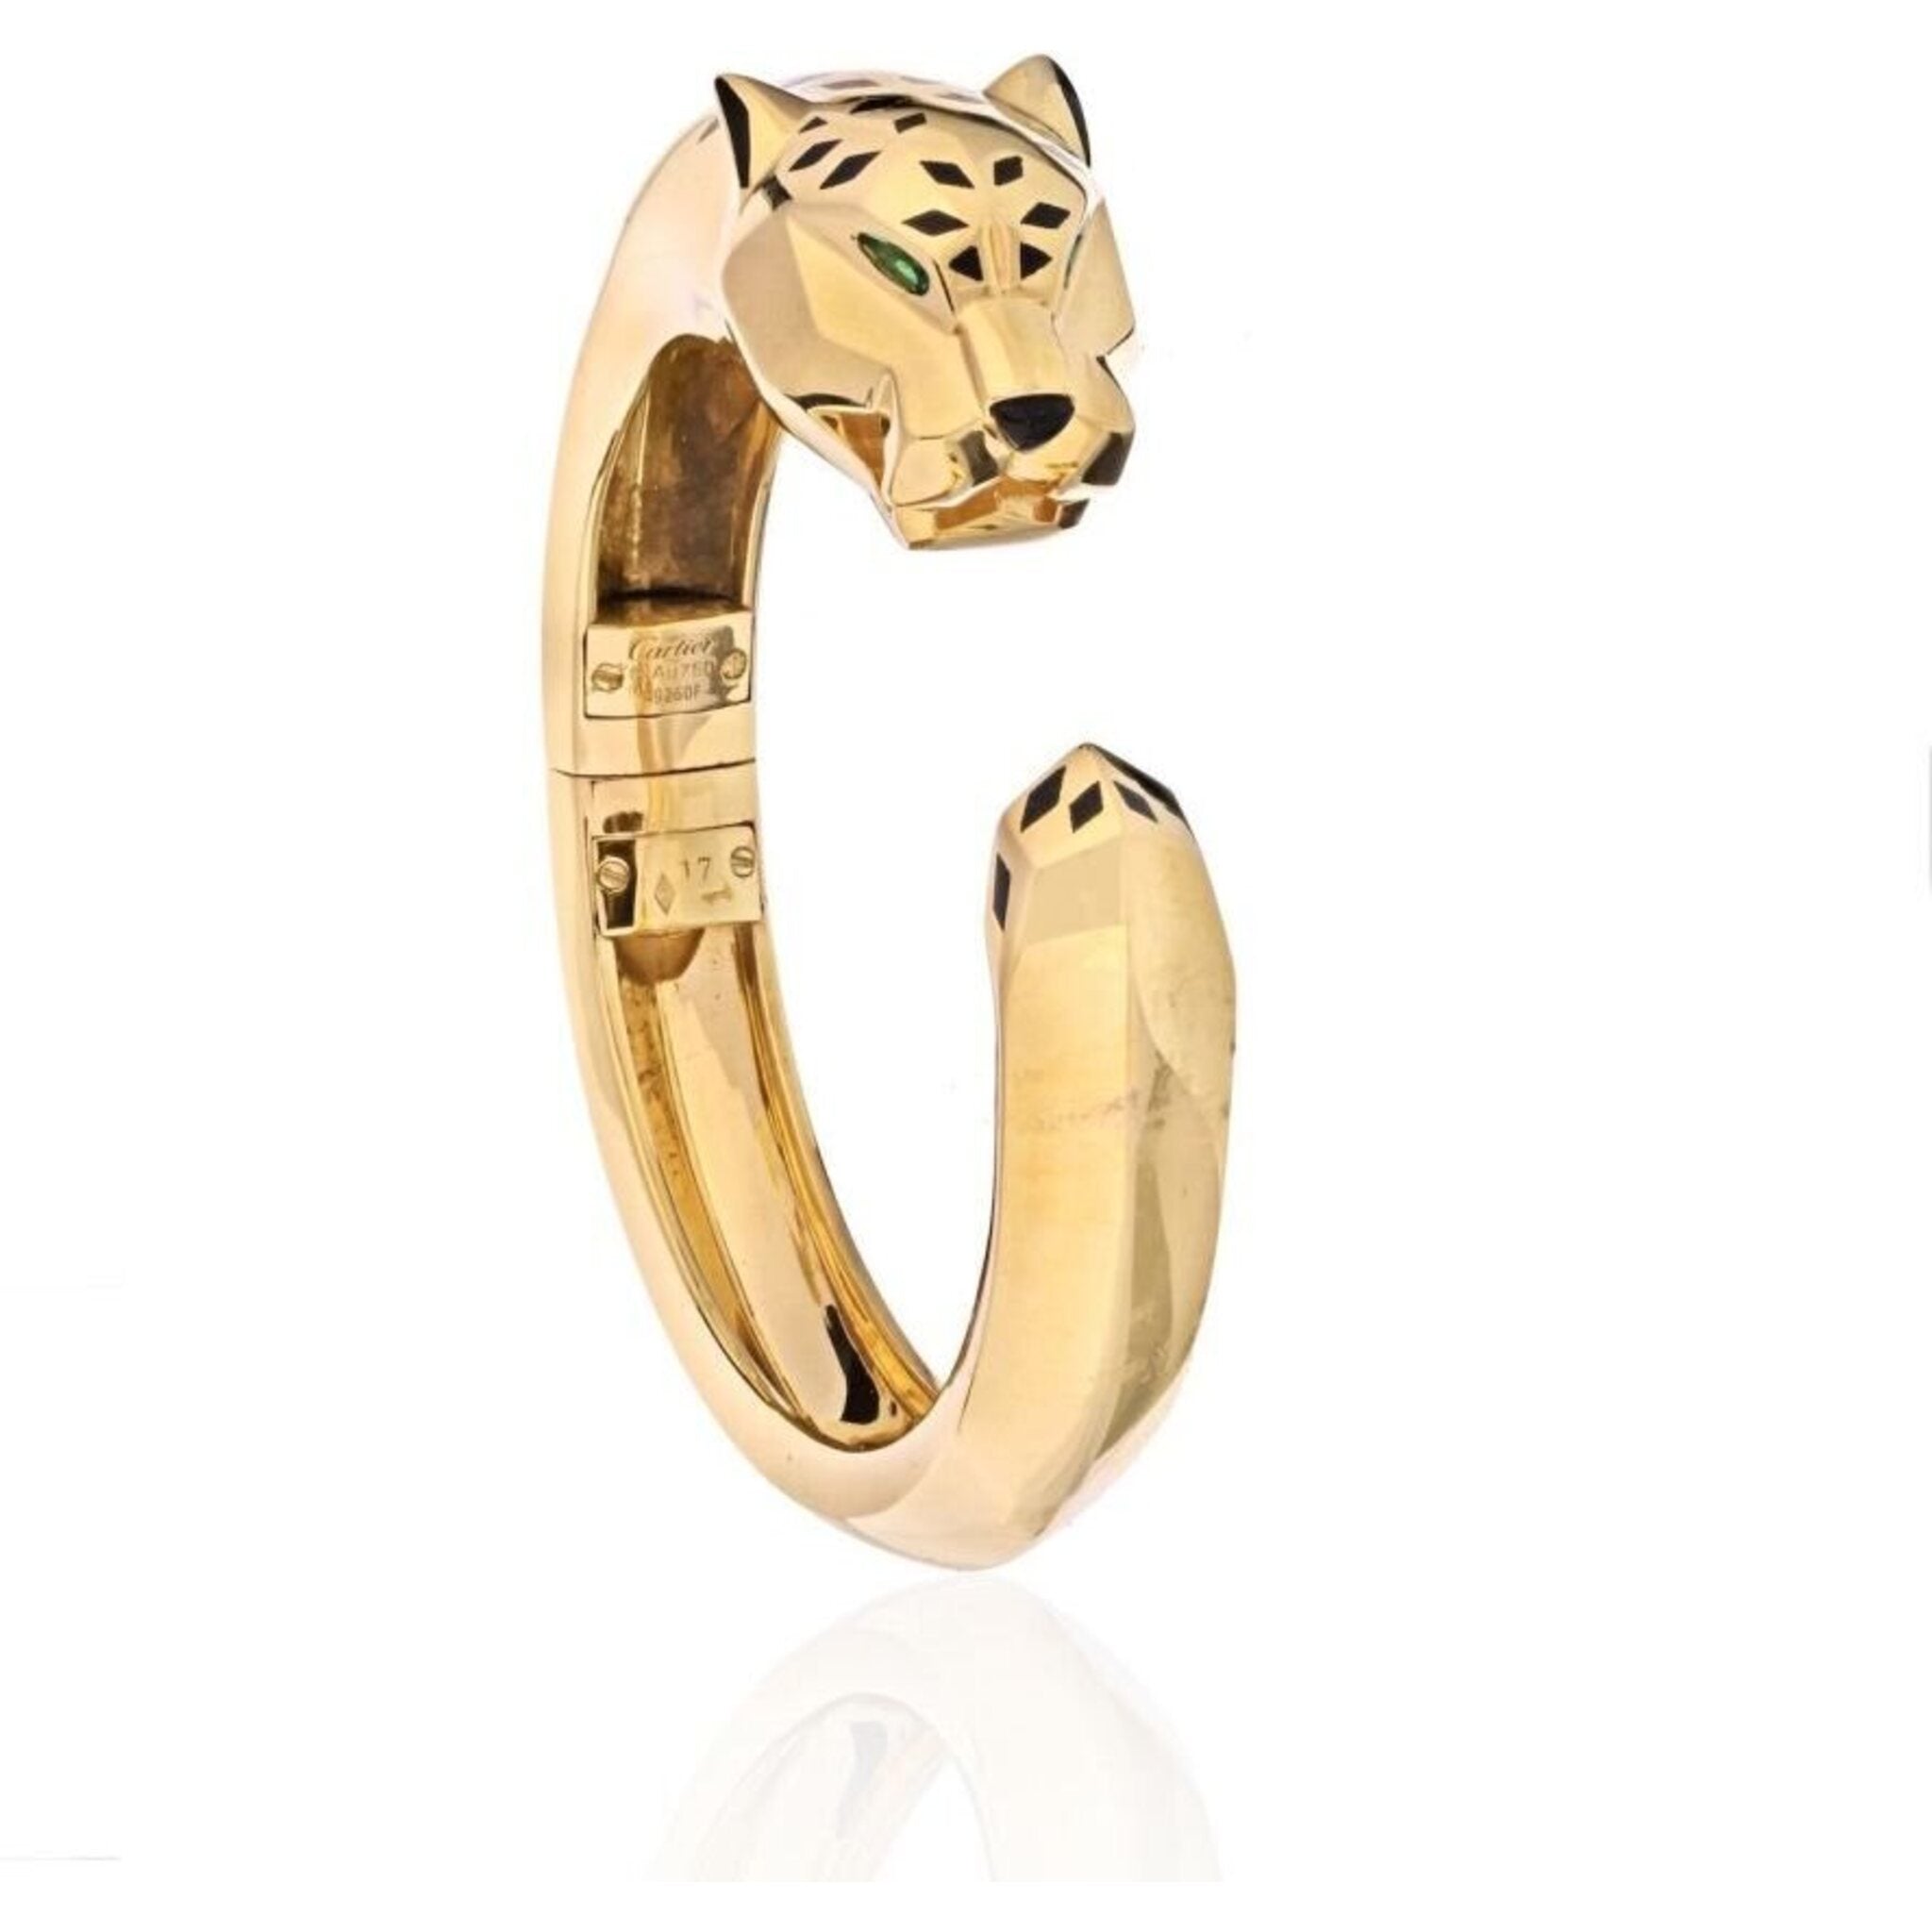 CRB6029817 - LOVE bracelet, 1 diamond - Yellow gold, diamond - Cartier